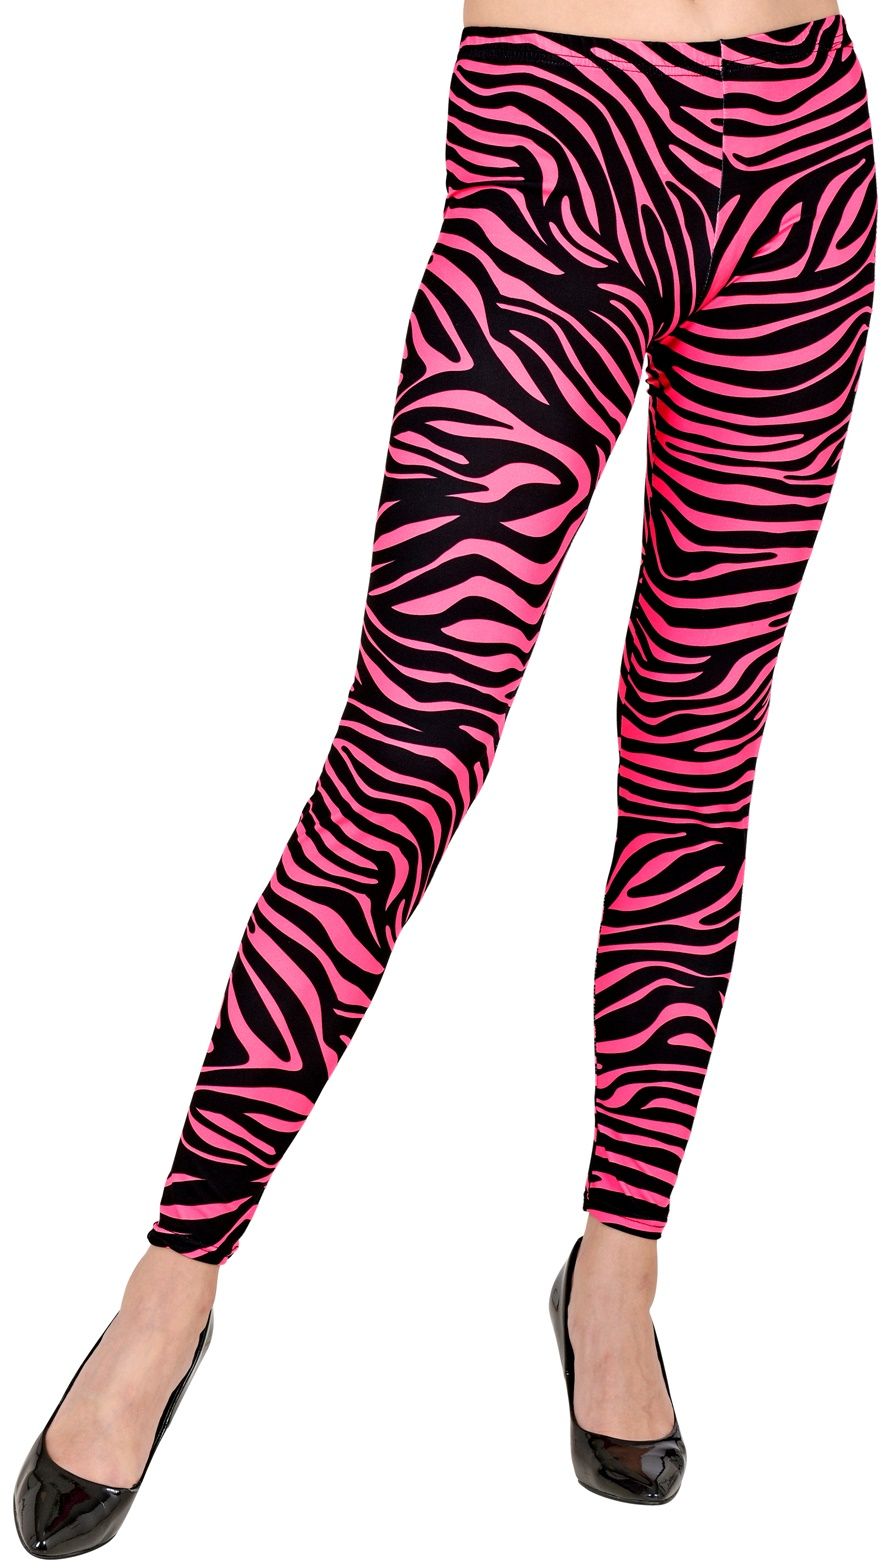 Neon roze 80s zebraprint legging